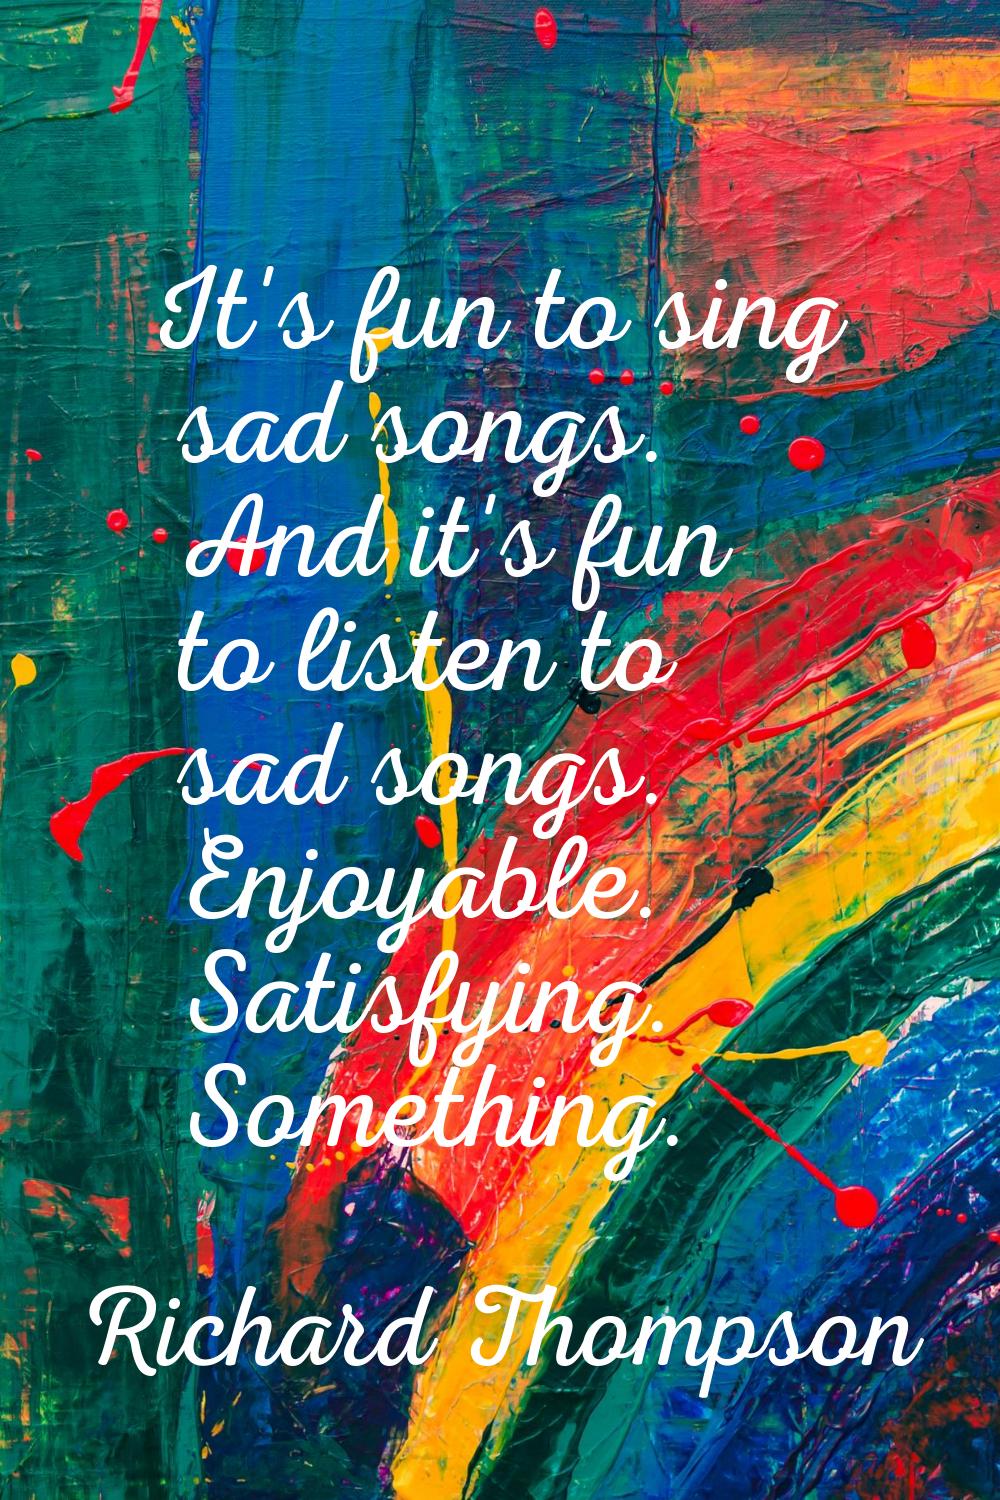 It's fun to sing sad songs. And it's fun to listen to sad songs. Enjoyable. Satisfying. Something.